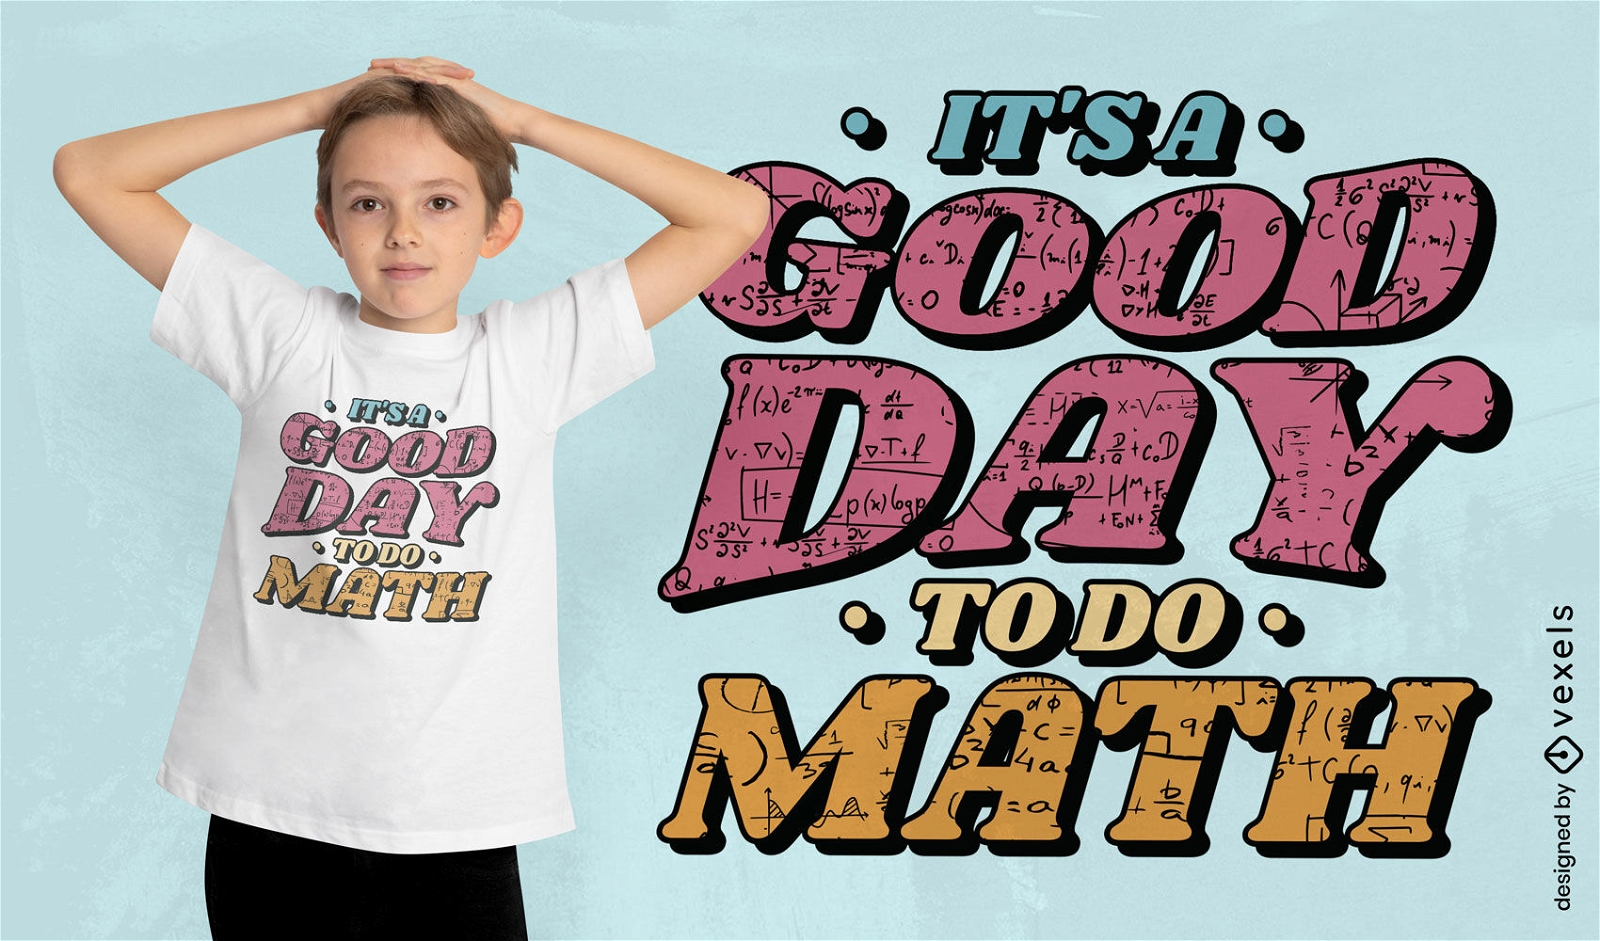 School math quote t-shirt design